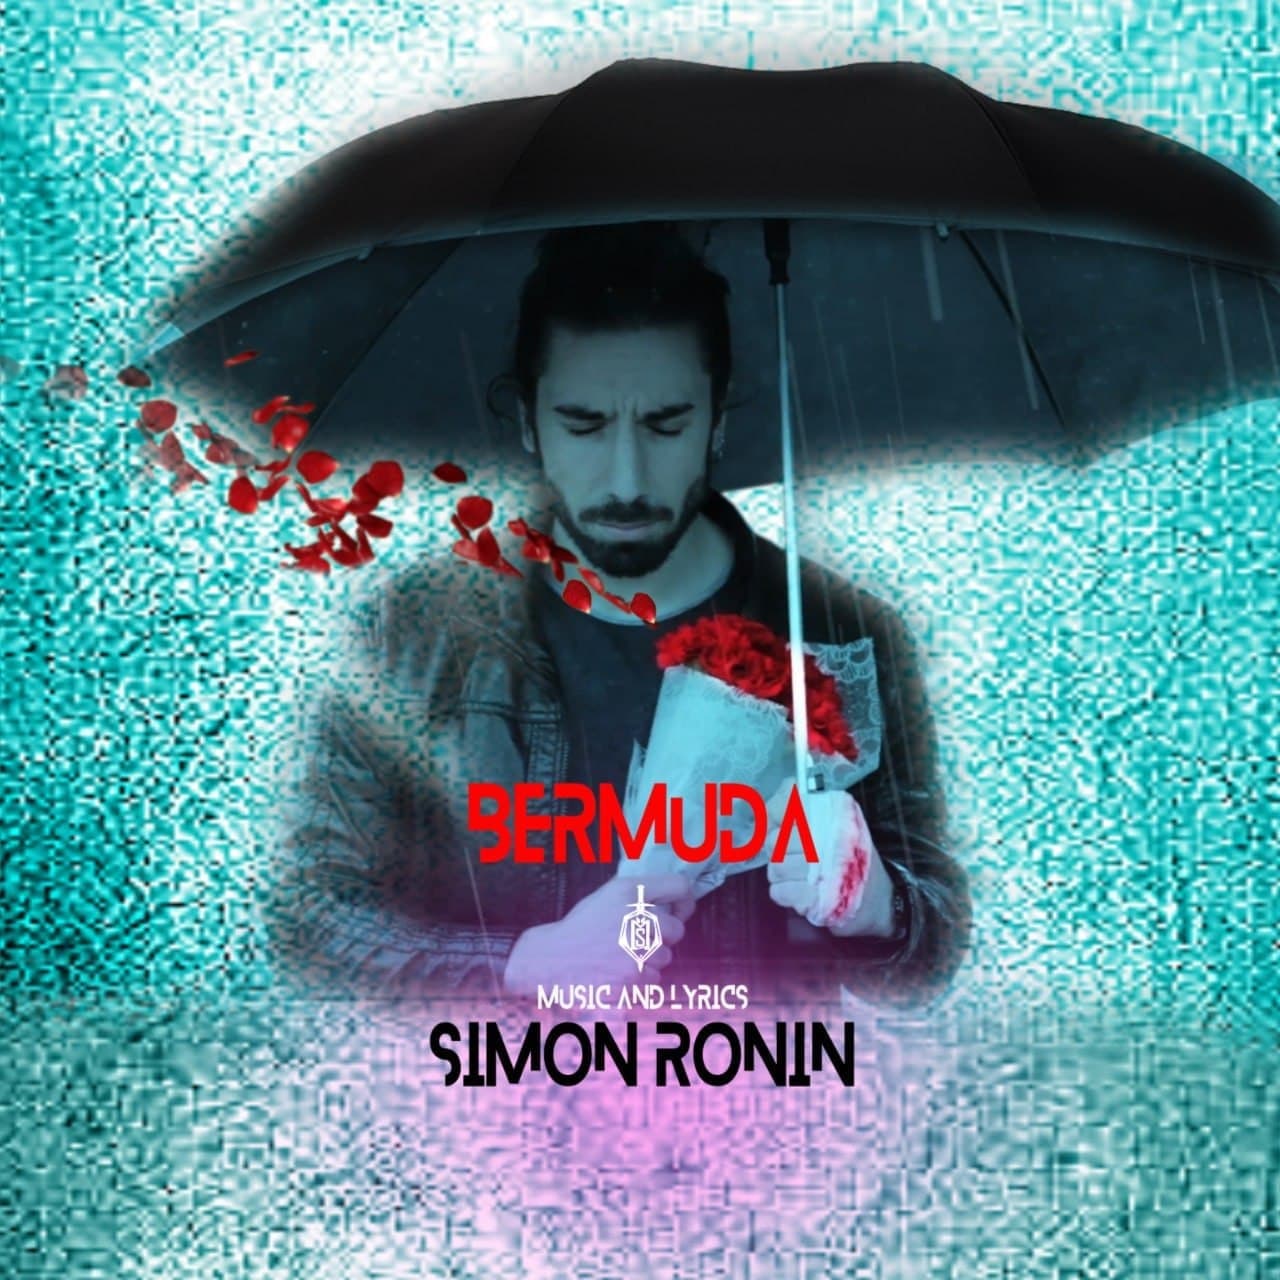 Simon Ronin - Bermuda